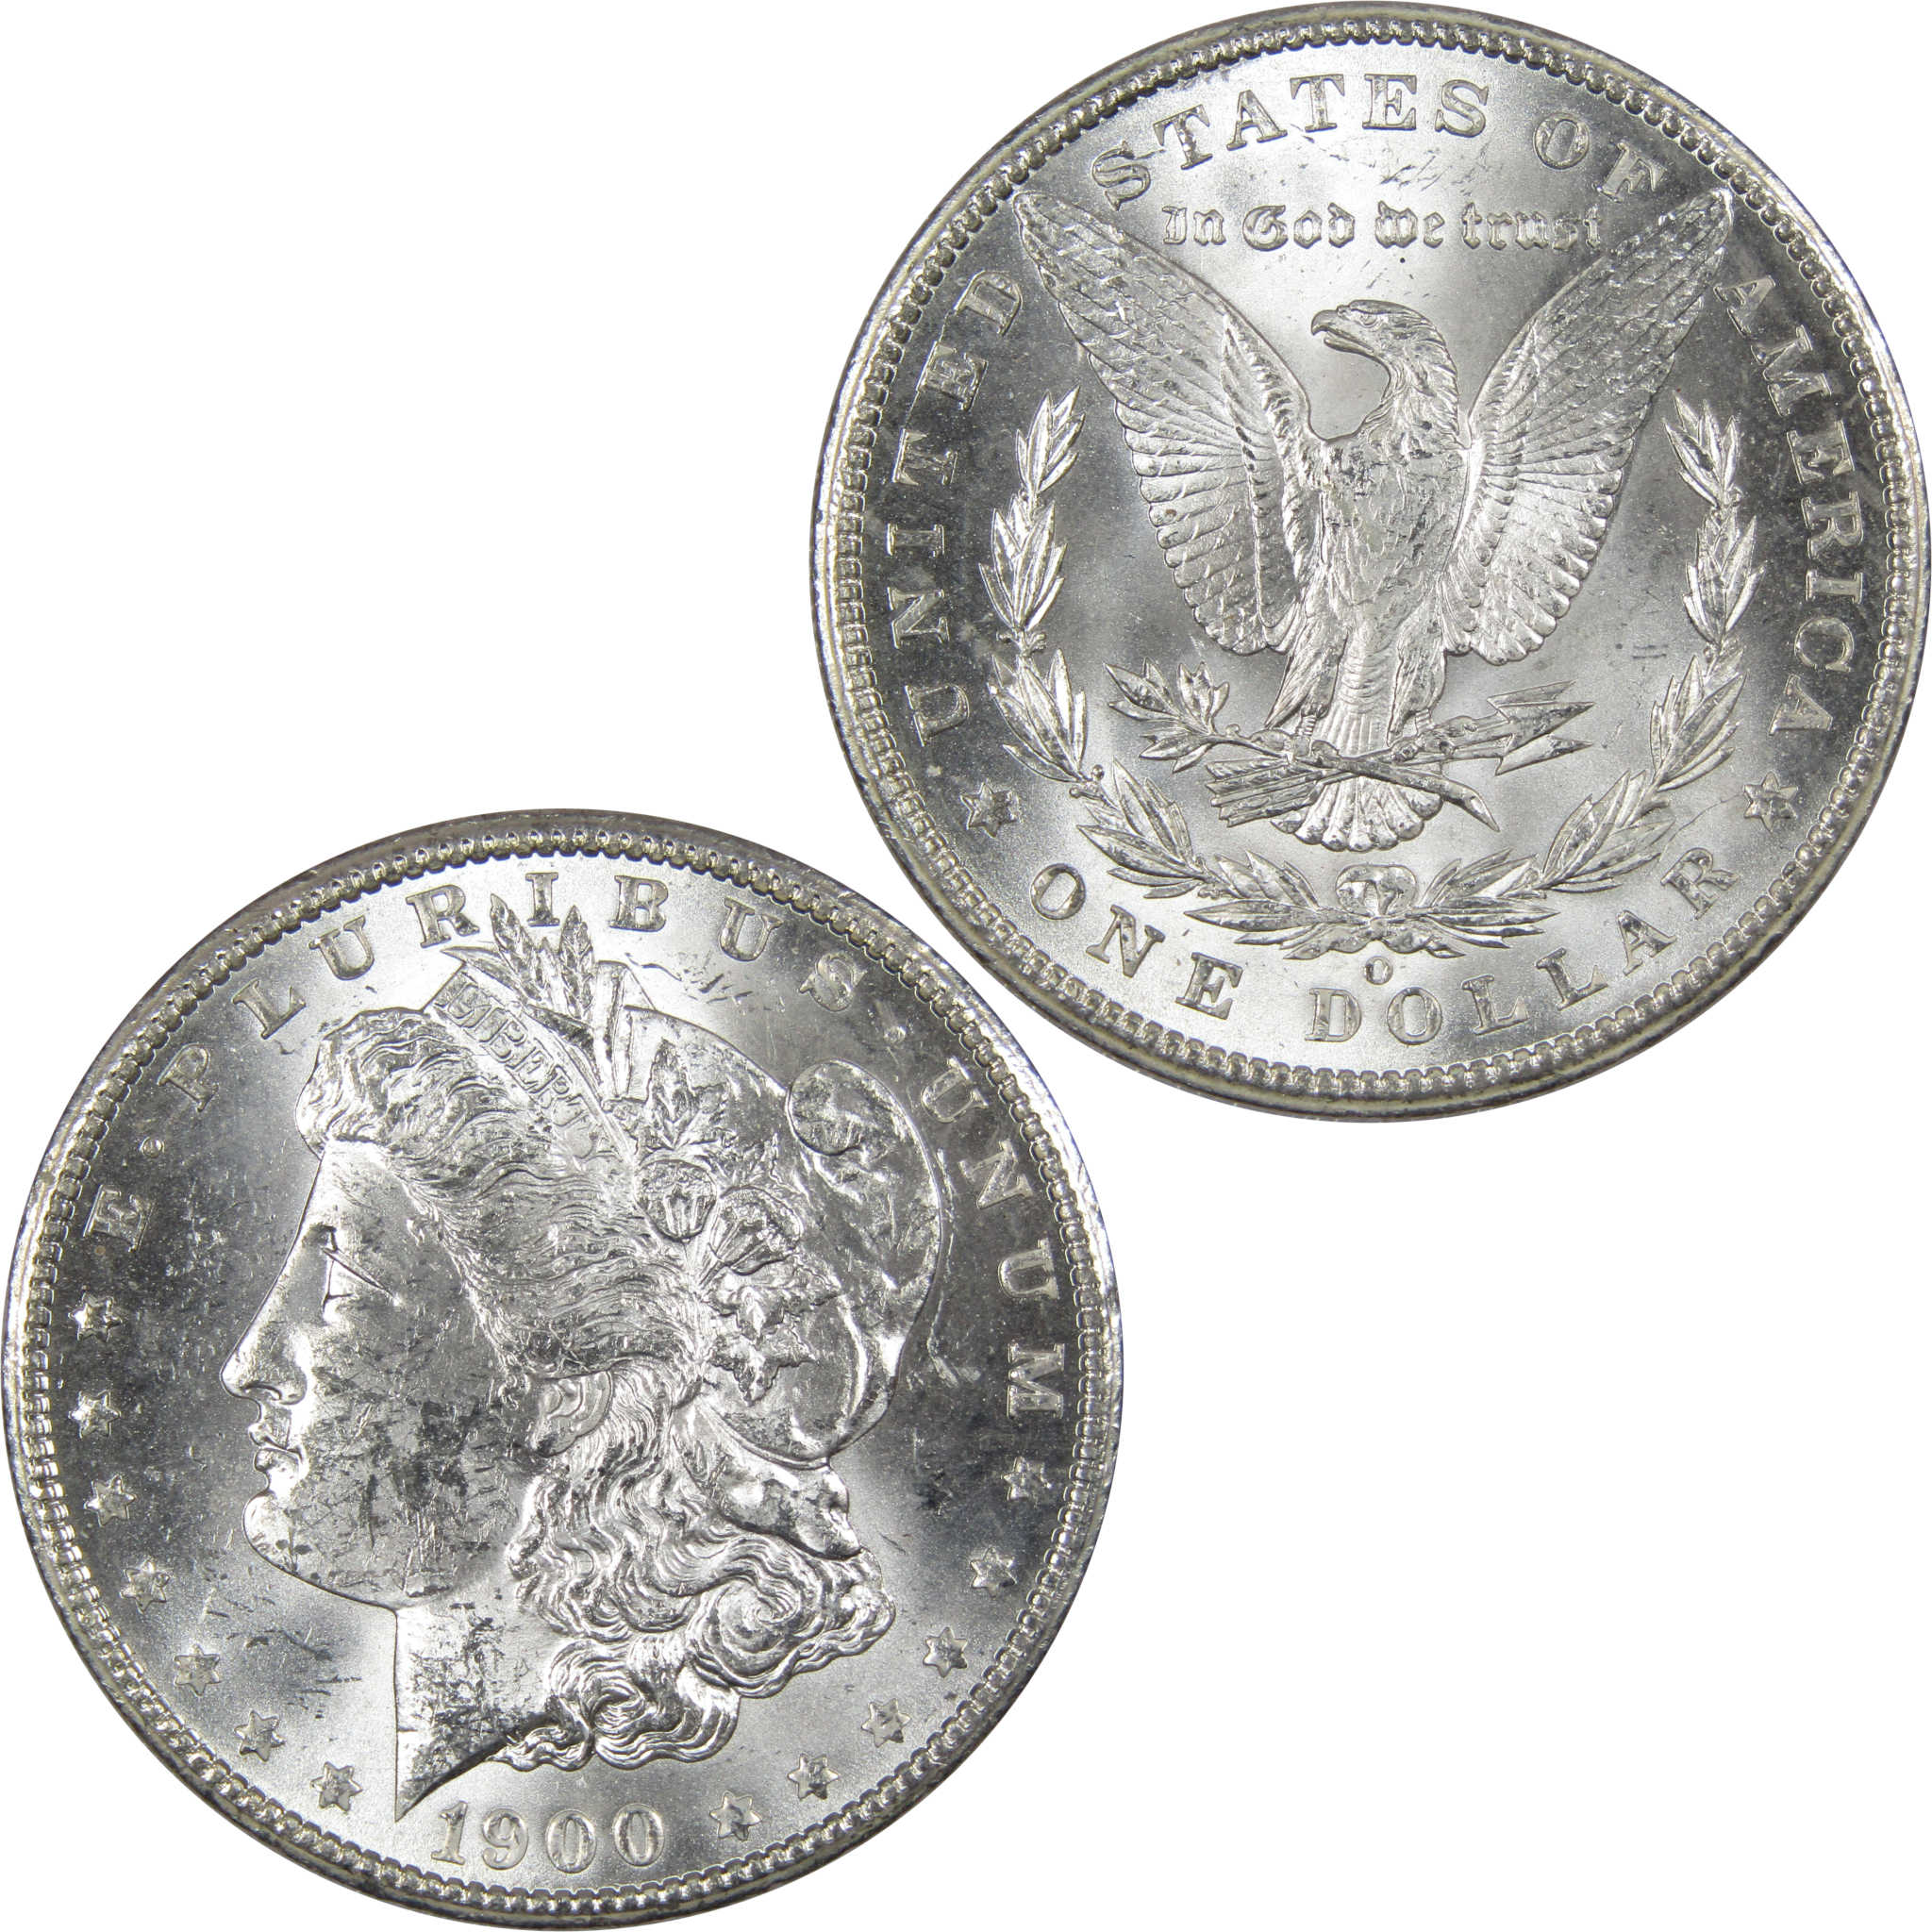 1900 O Morgan Dollar BU Uncirculated Mint State 90% Silver SKU:IPC9764 - Morgan coin - Morgan silver dollar - Morgan silver dollar for sale - Profile Coins &amp; Collectibles